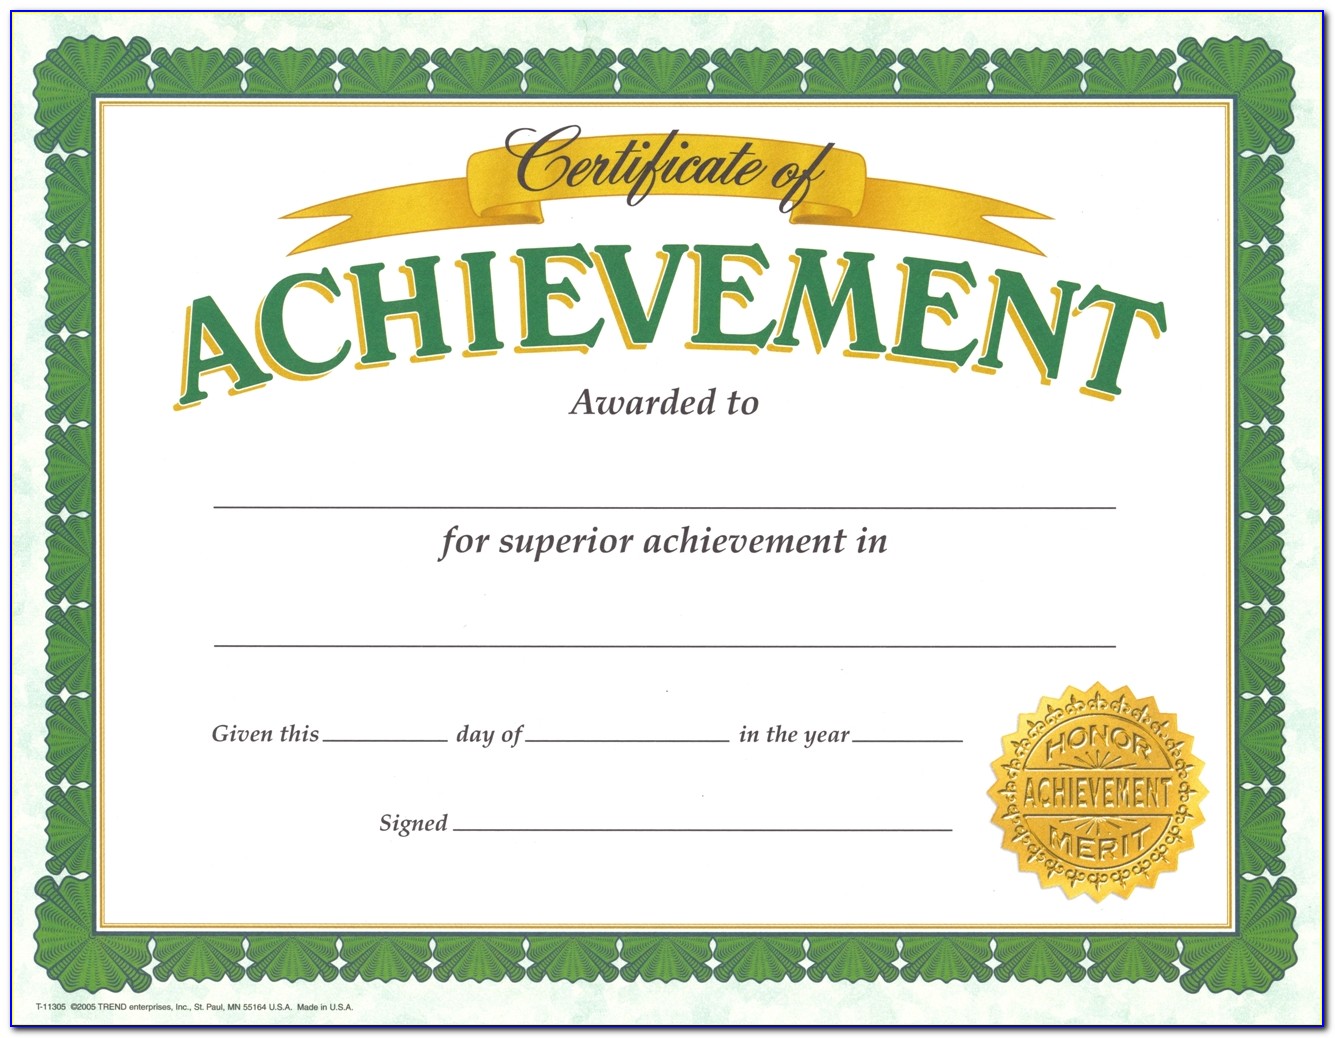 Jrotc Army Certificate Of Achievement Award Template